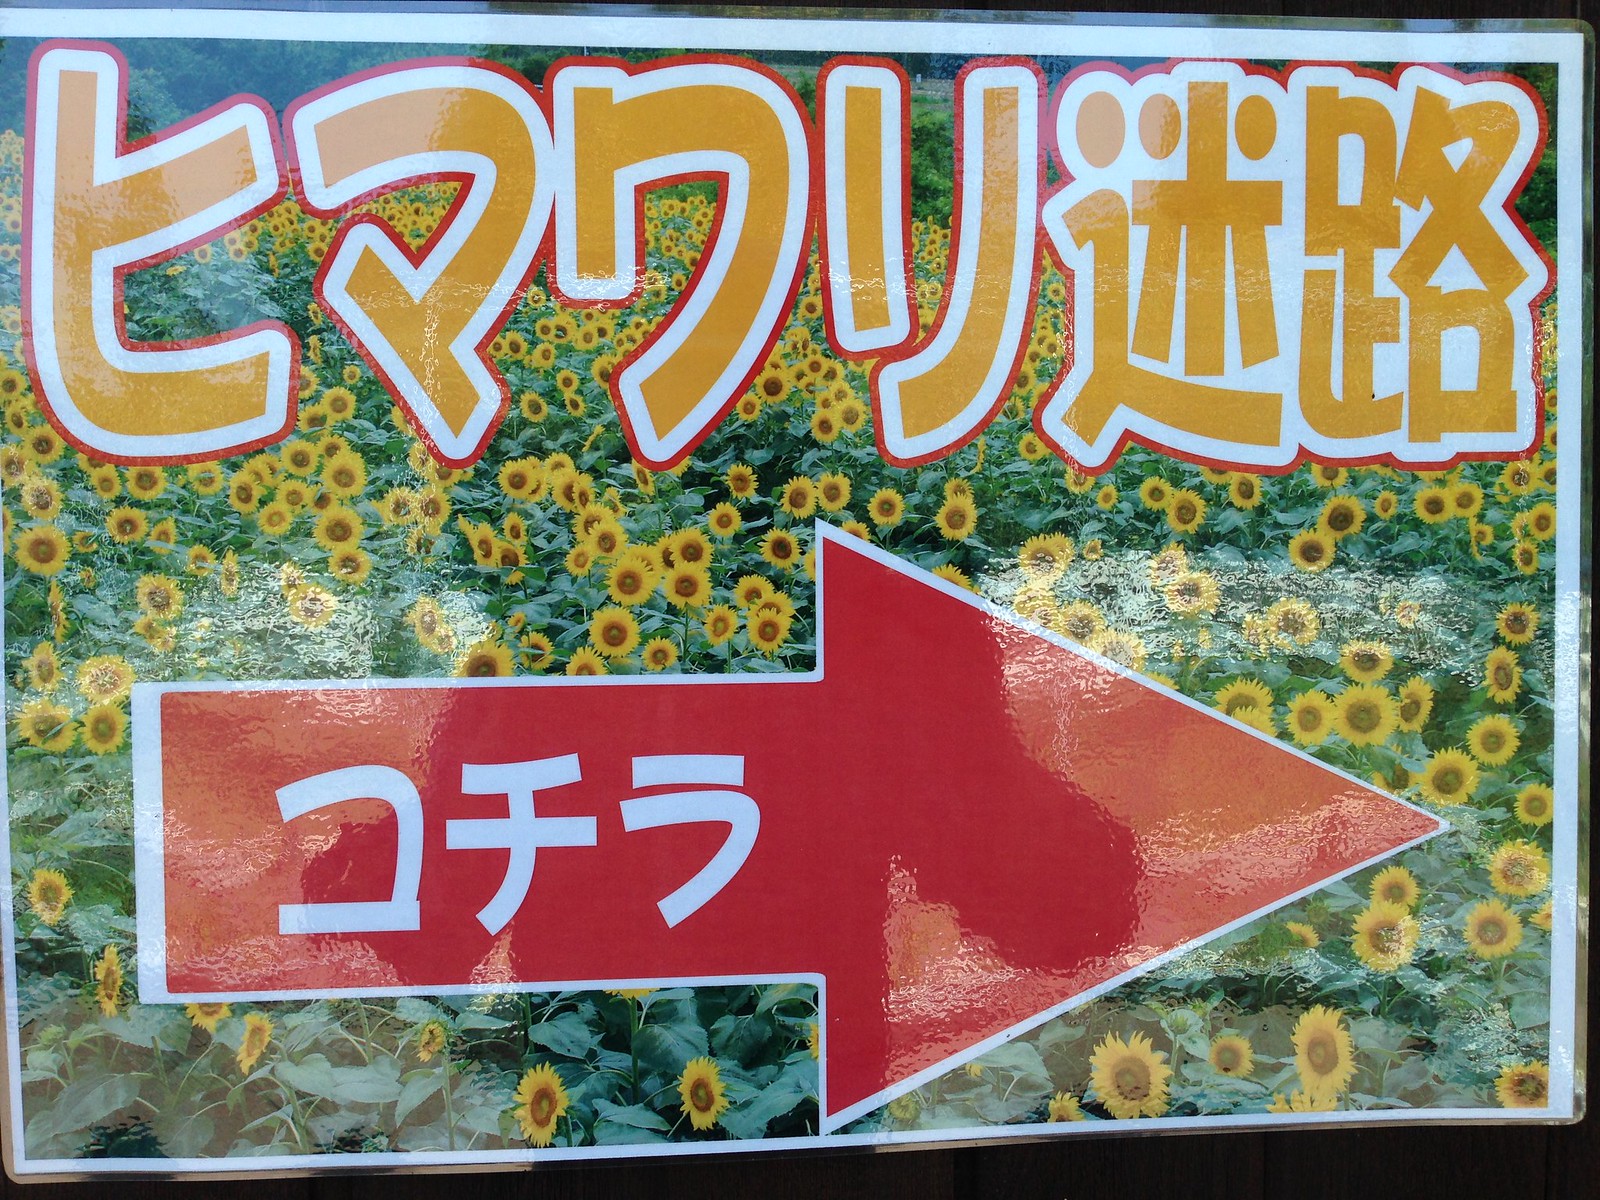 Visitors are surrounded by walls of sunflowers at Narita Yume Bokujo in Narita